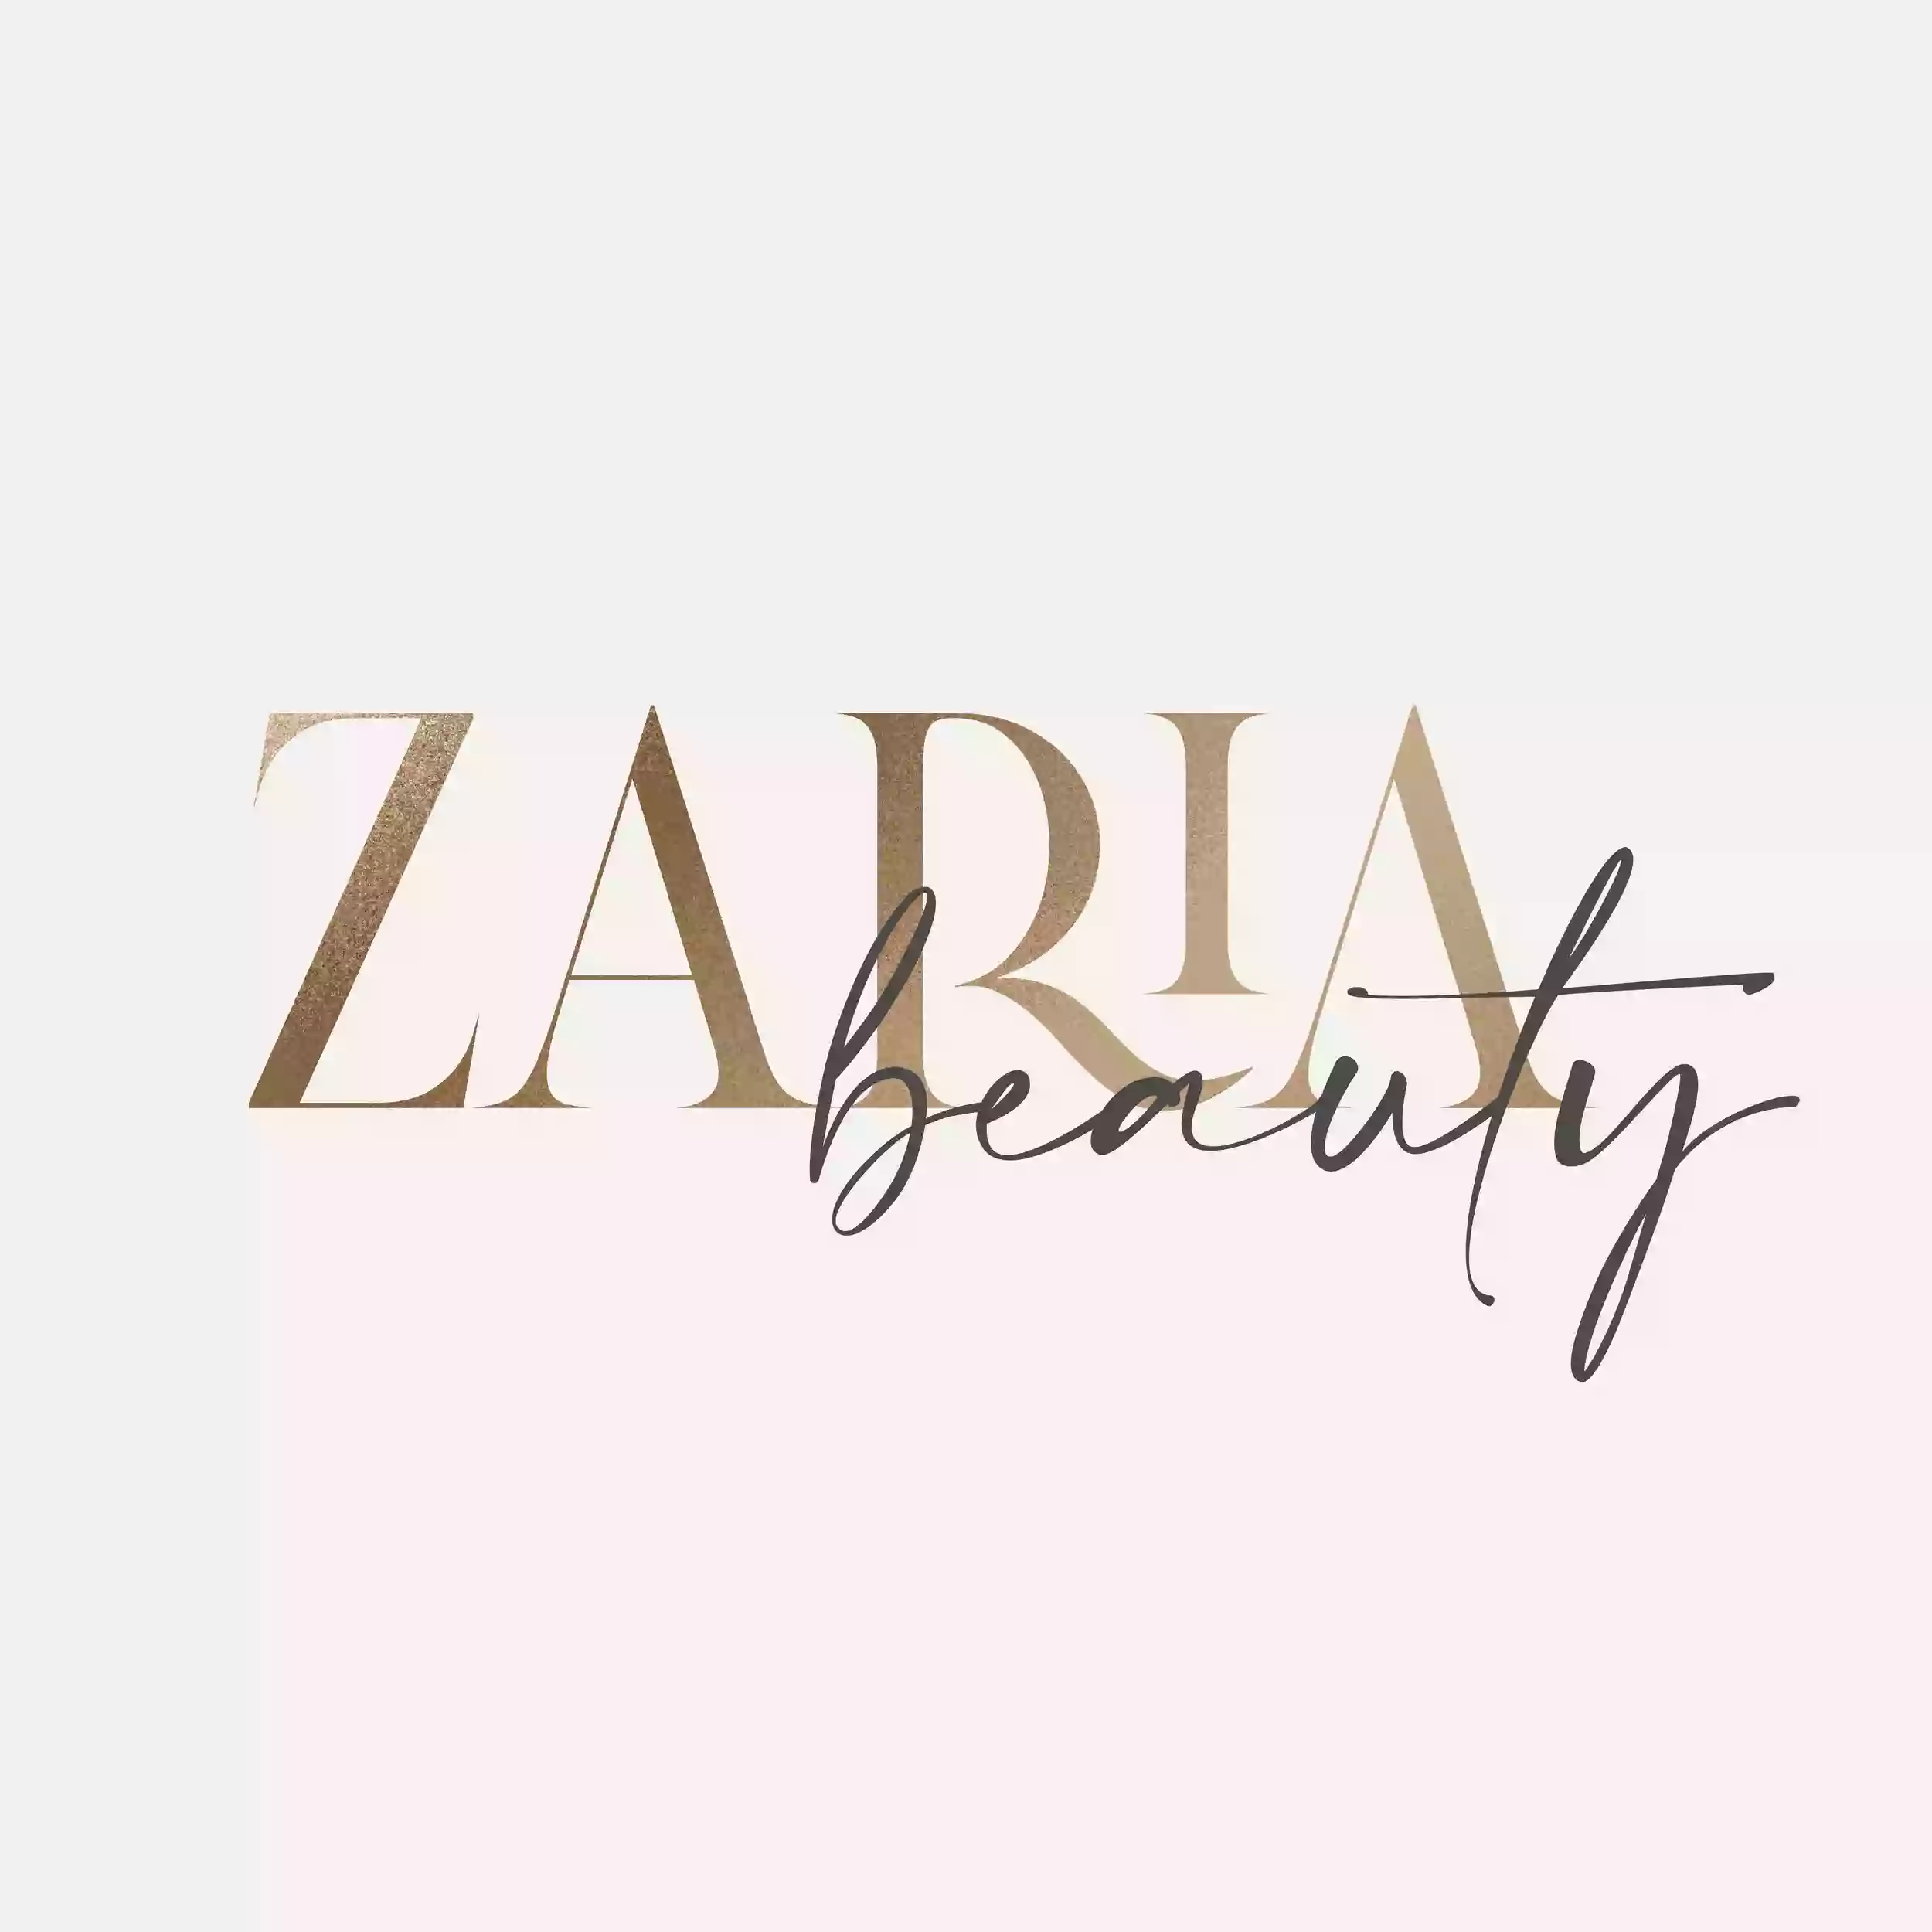 Zaria Beauty